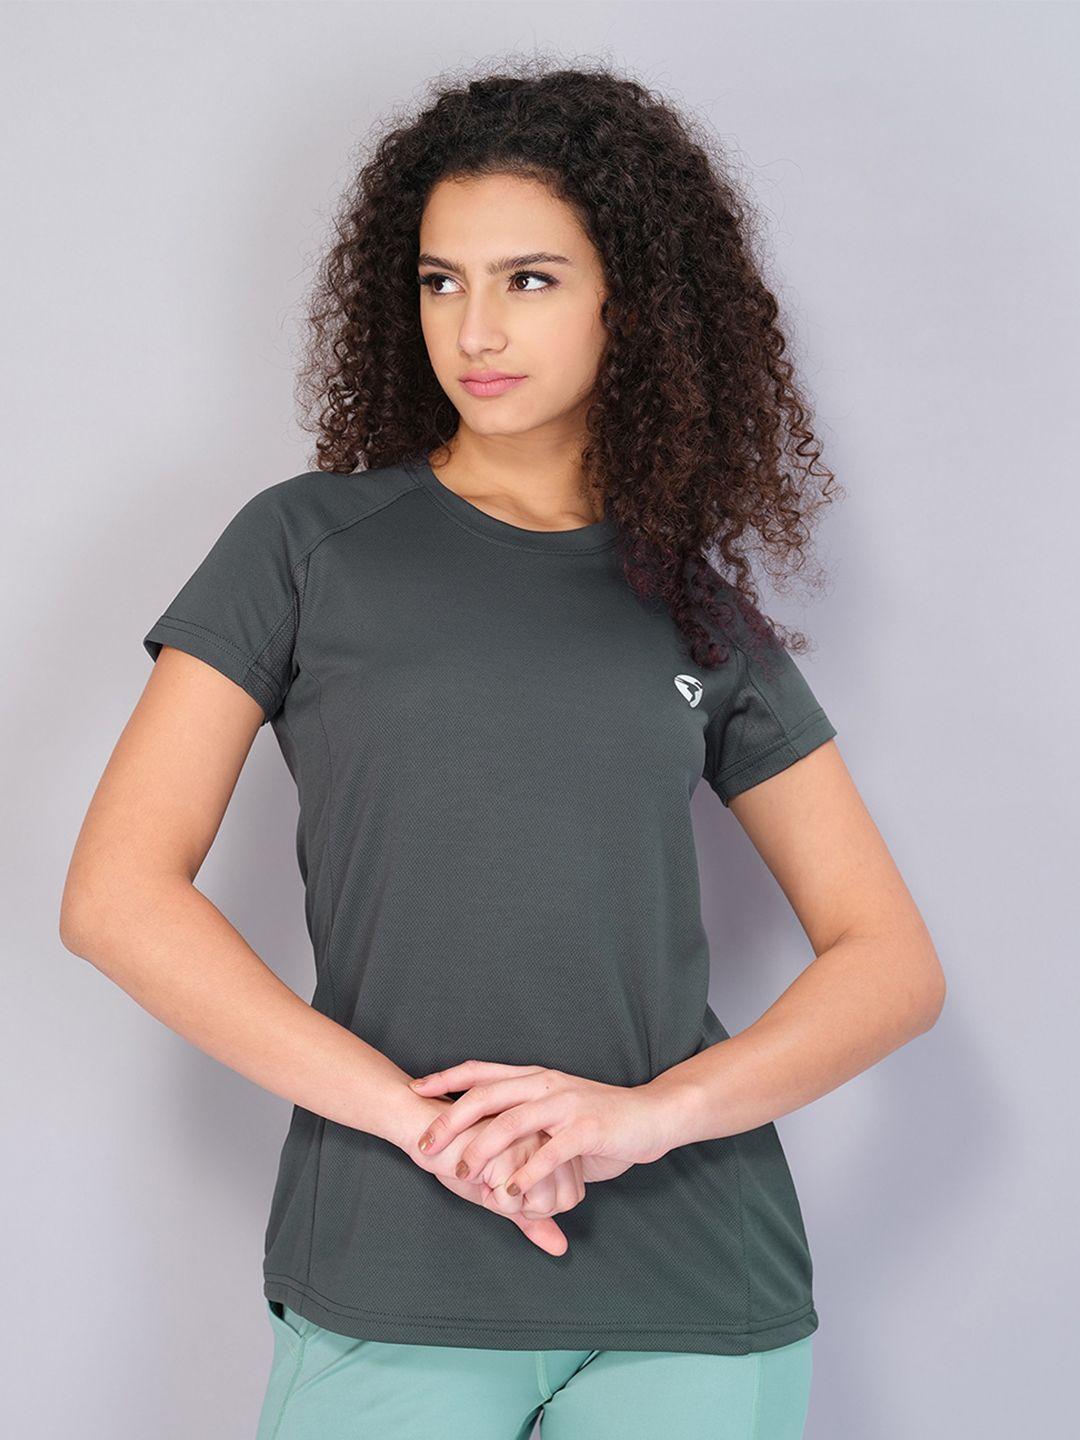 technosport women olive green antimicrobial t-shirt